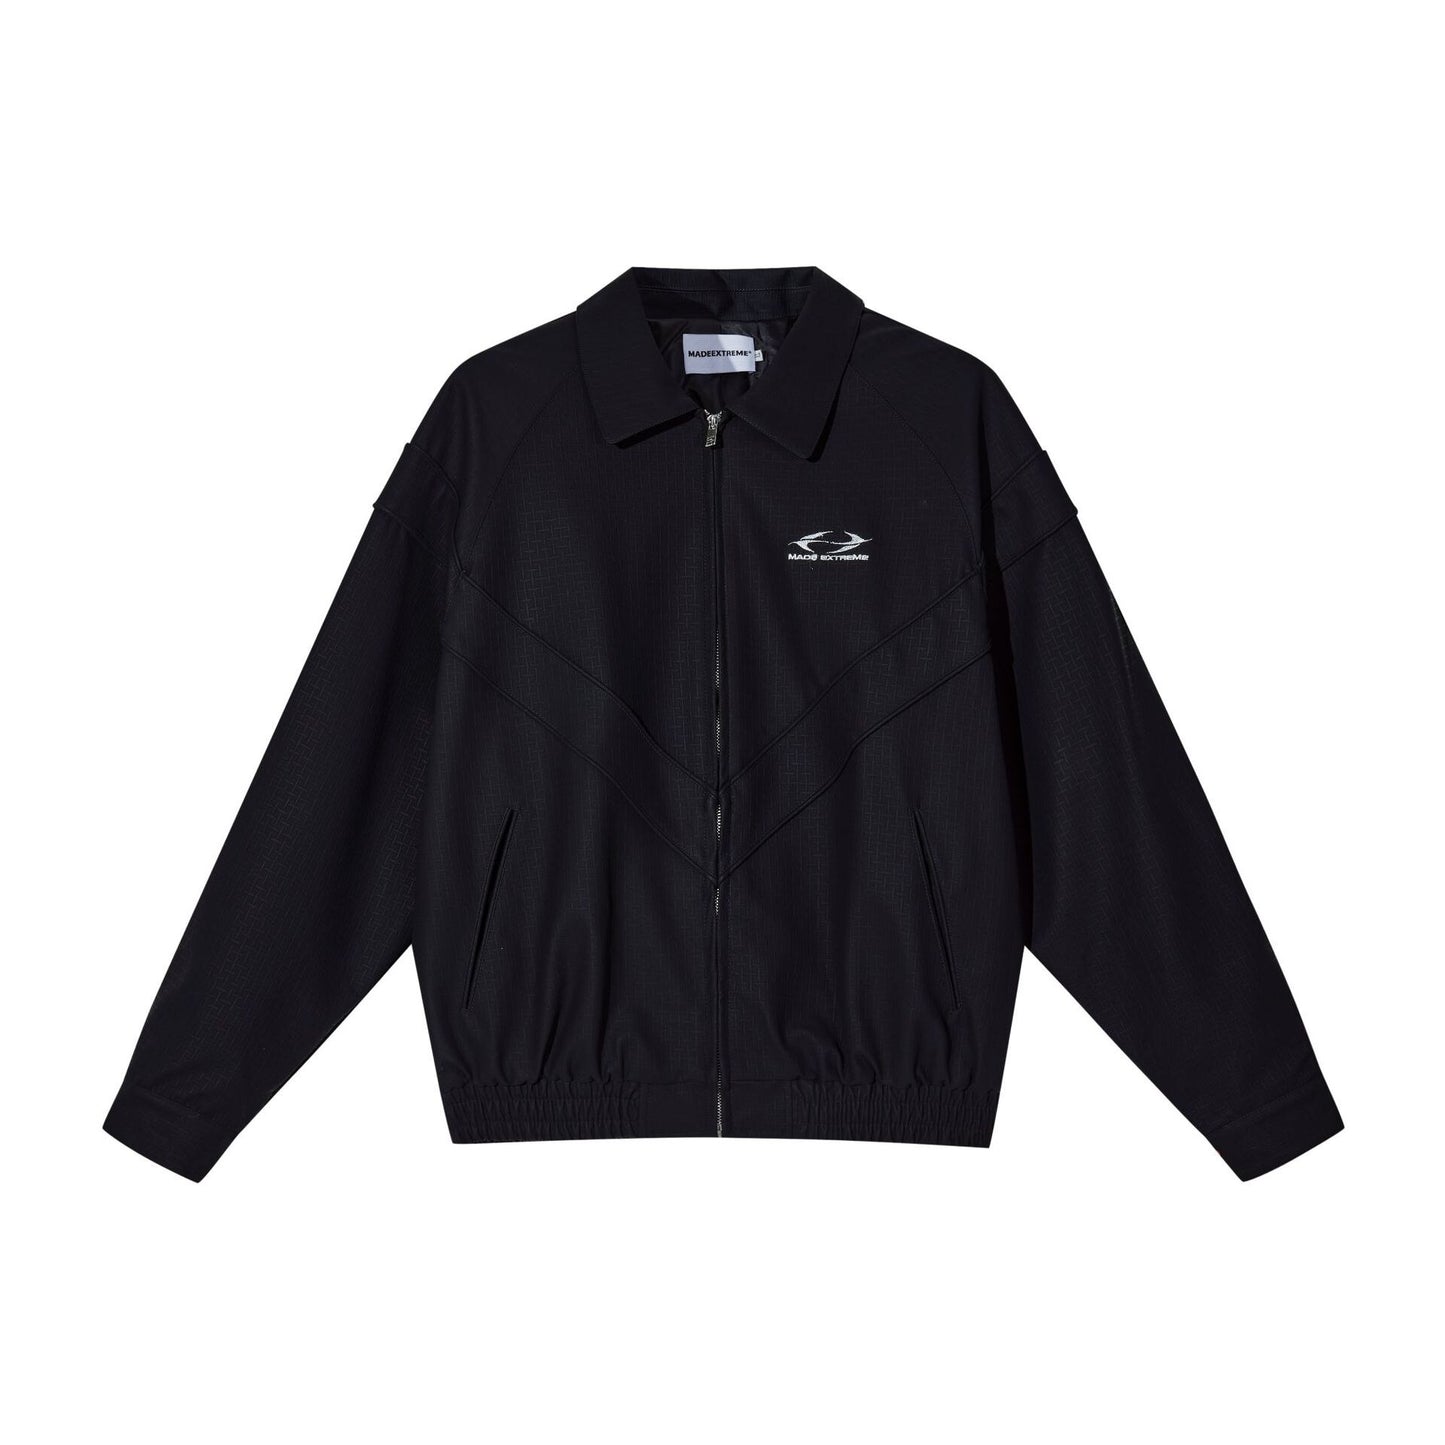 MADEEXTREME PU Leather Cleanfit Jacket